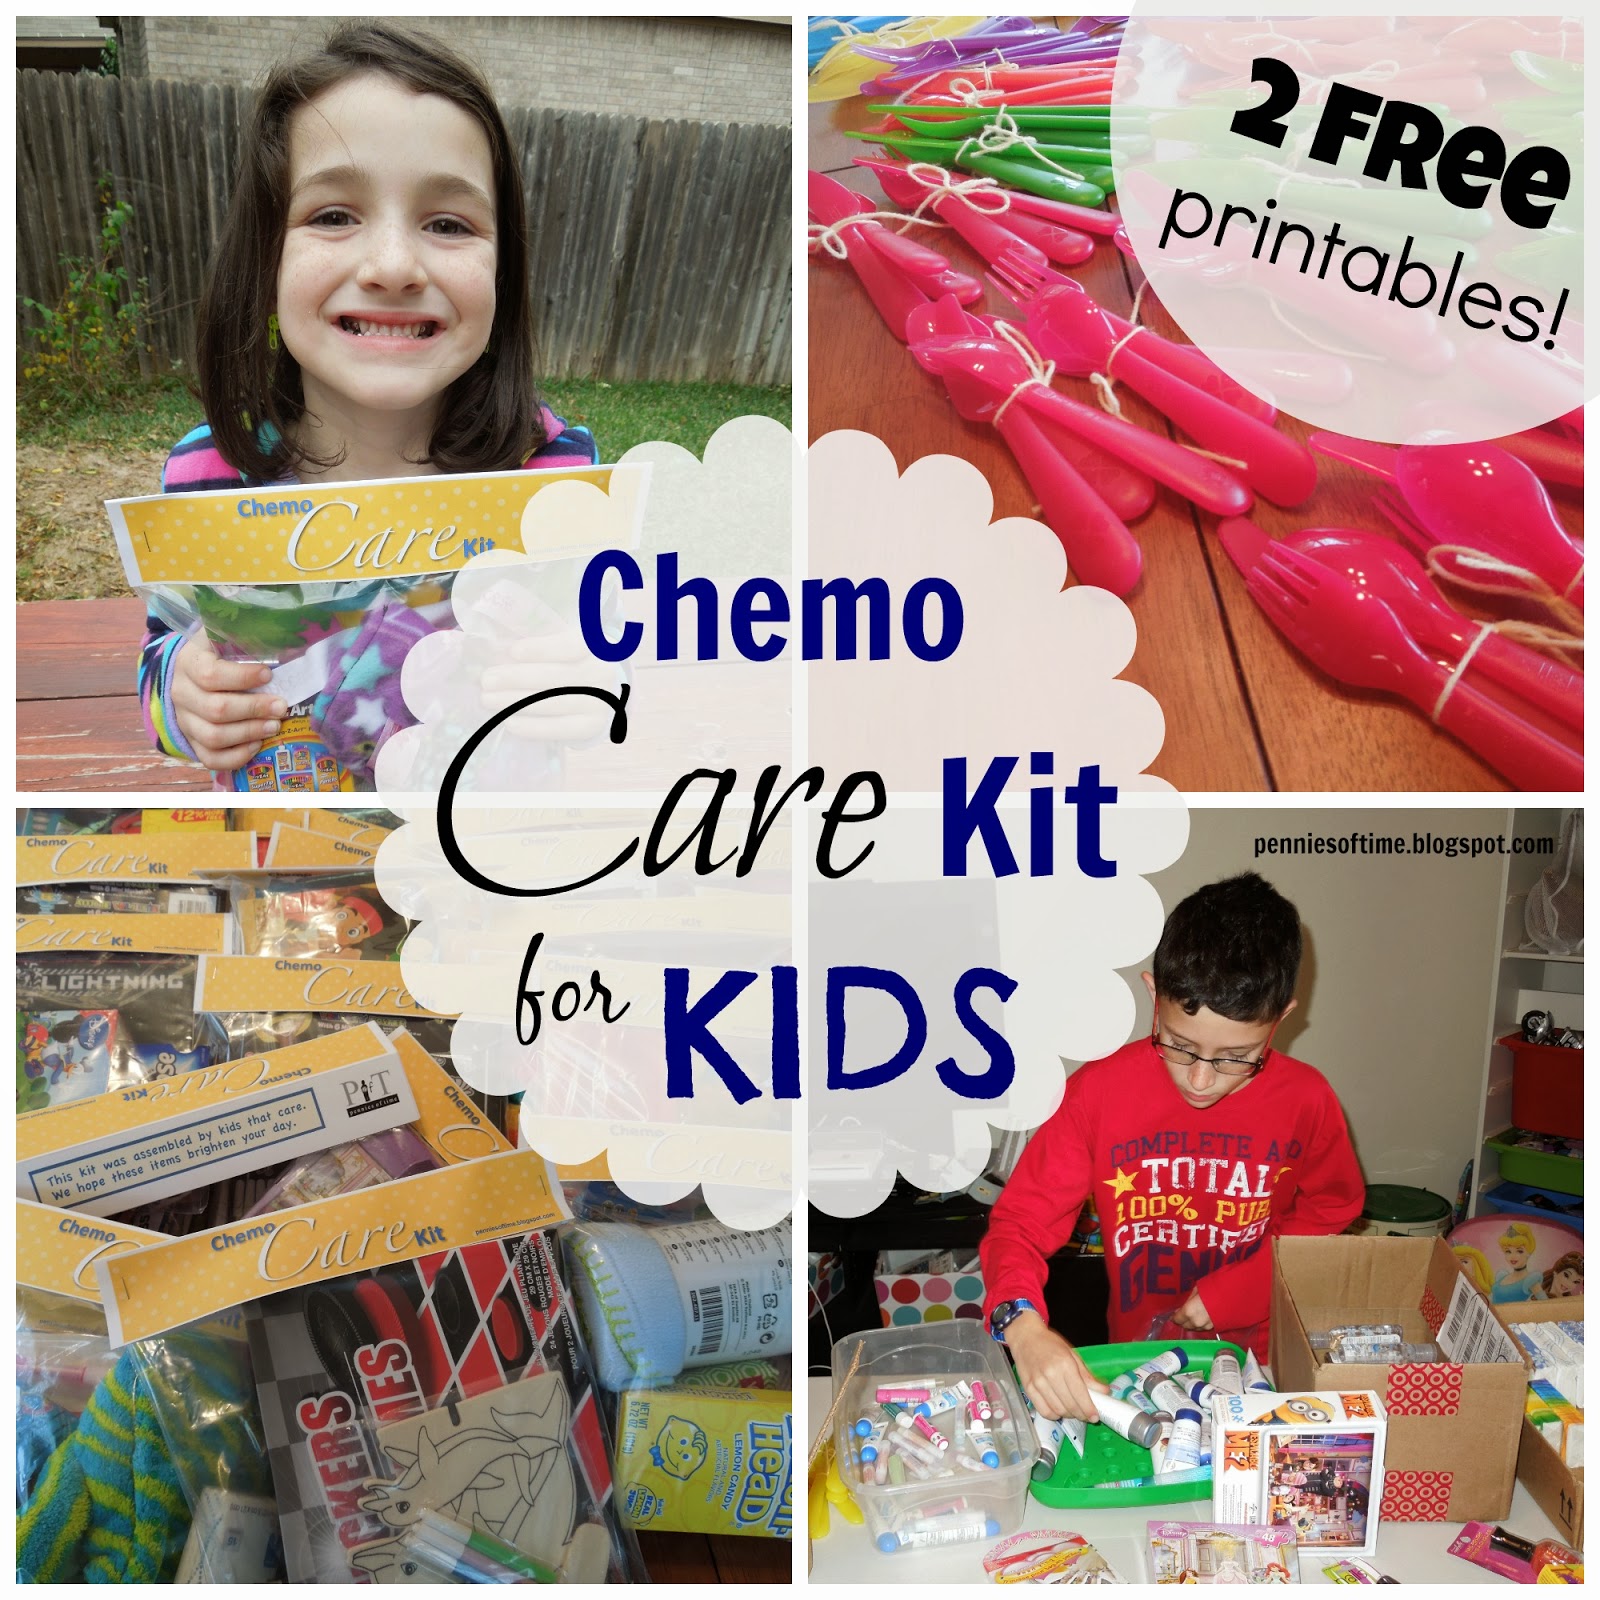 http://penniesoftime.blogspot.com/2014/01/chemo-care-kit-for-kids-service-project.html